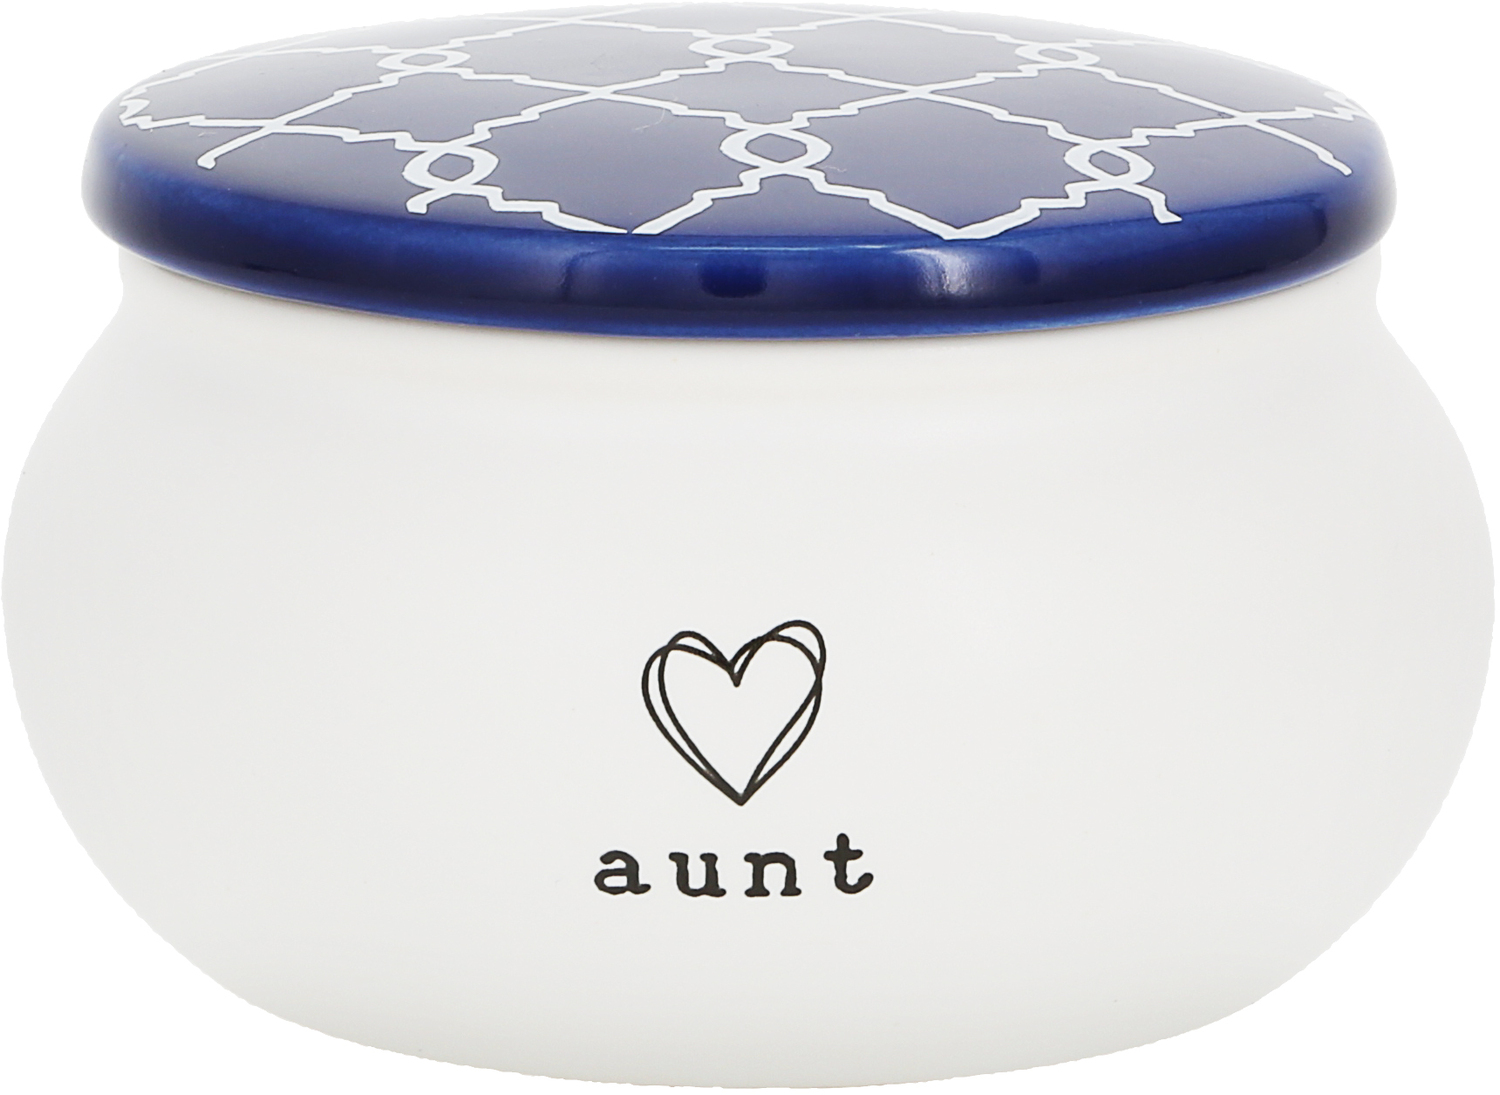 Aunt by You Make Me Smile -ALW - Aunt - 3.5" Ceramic Keepsake Box